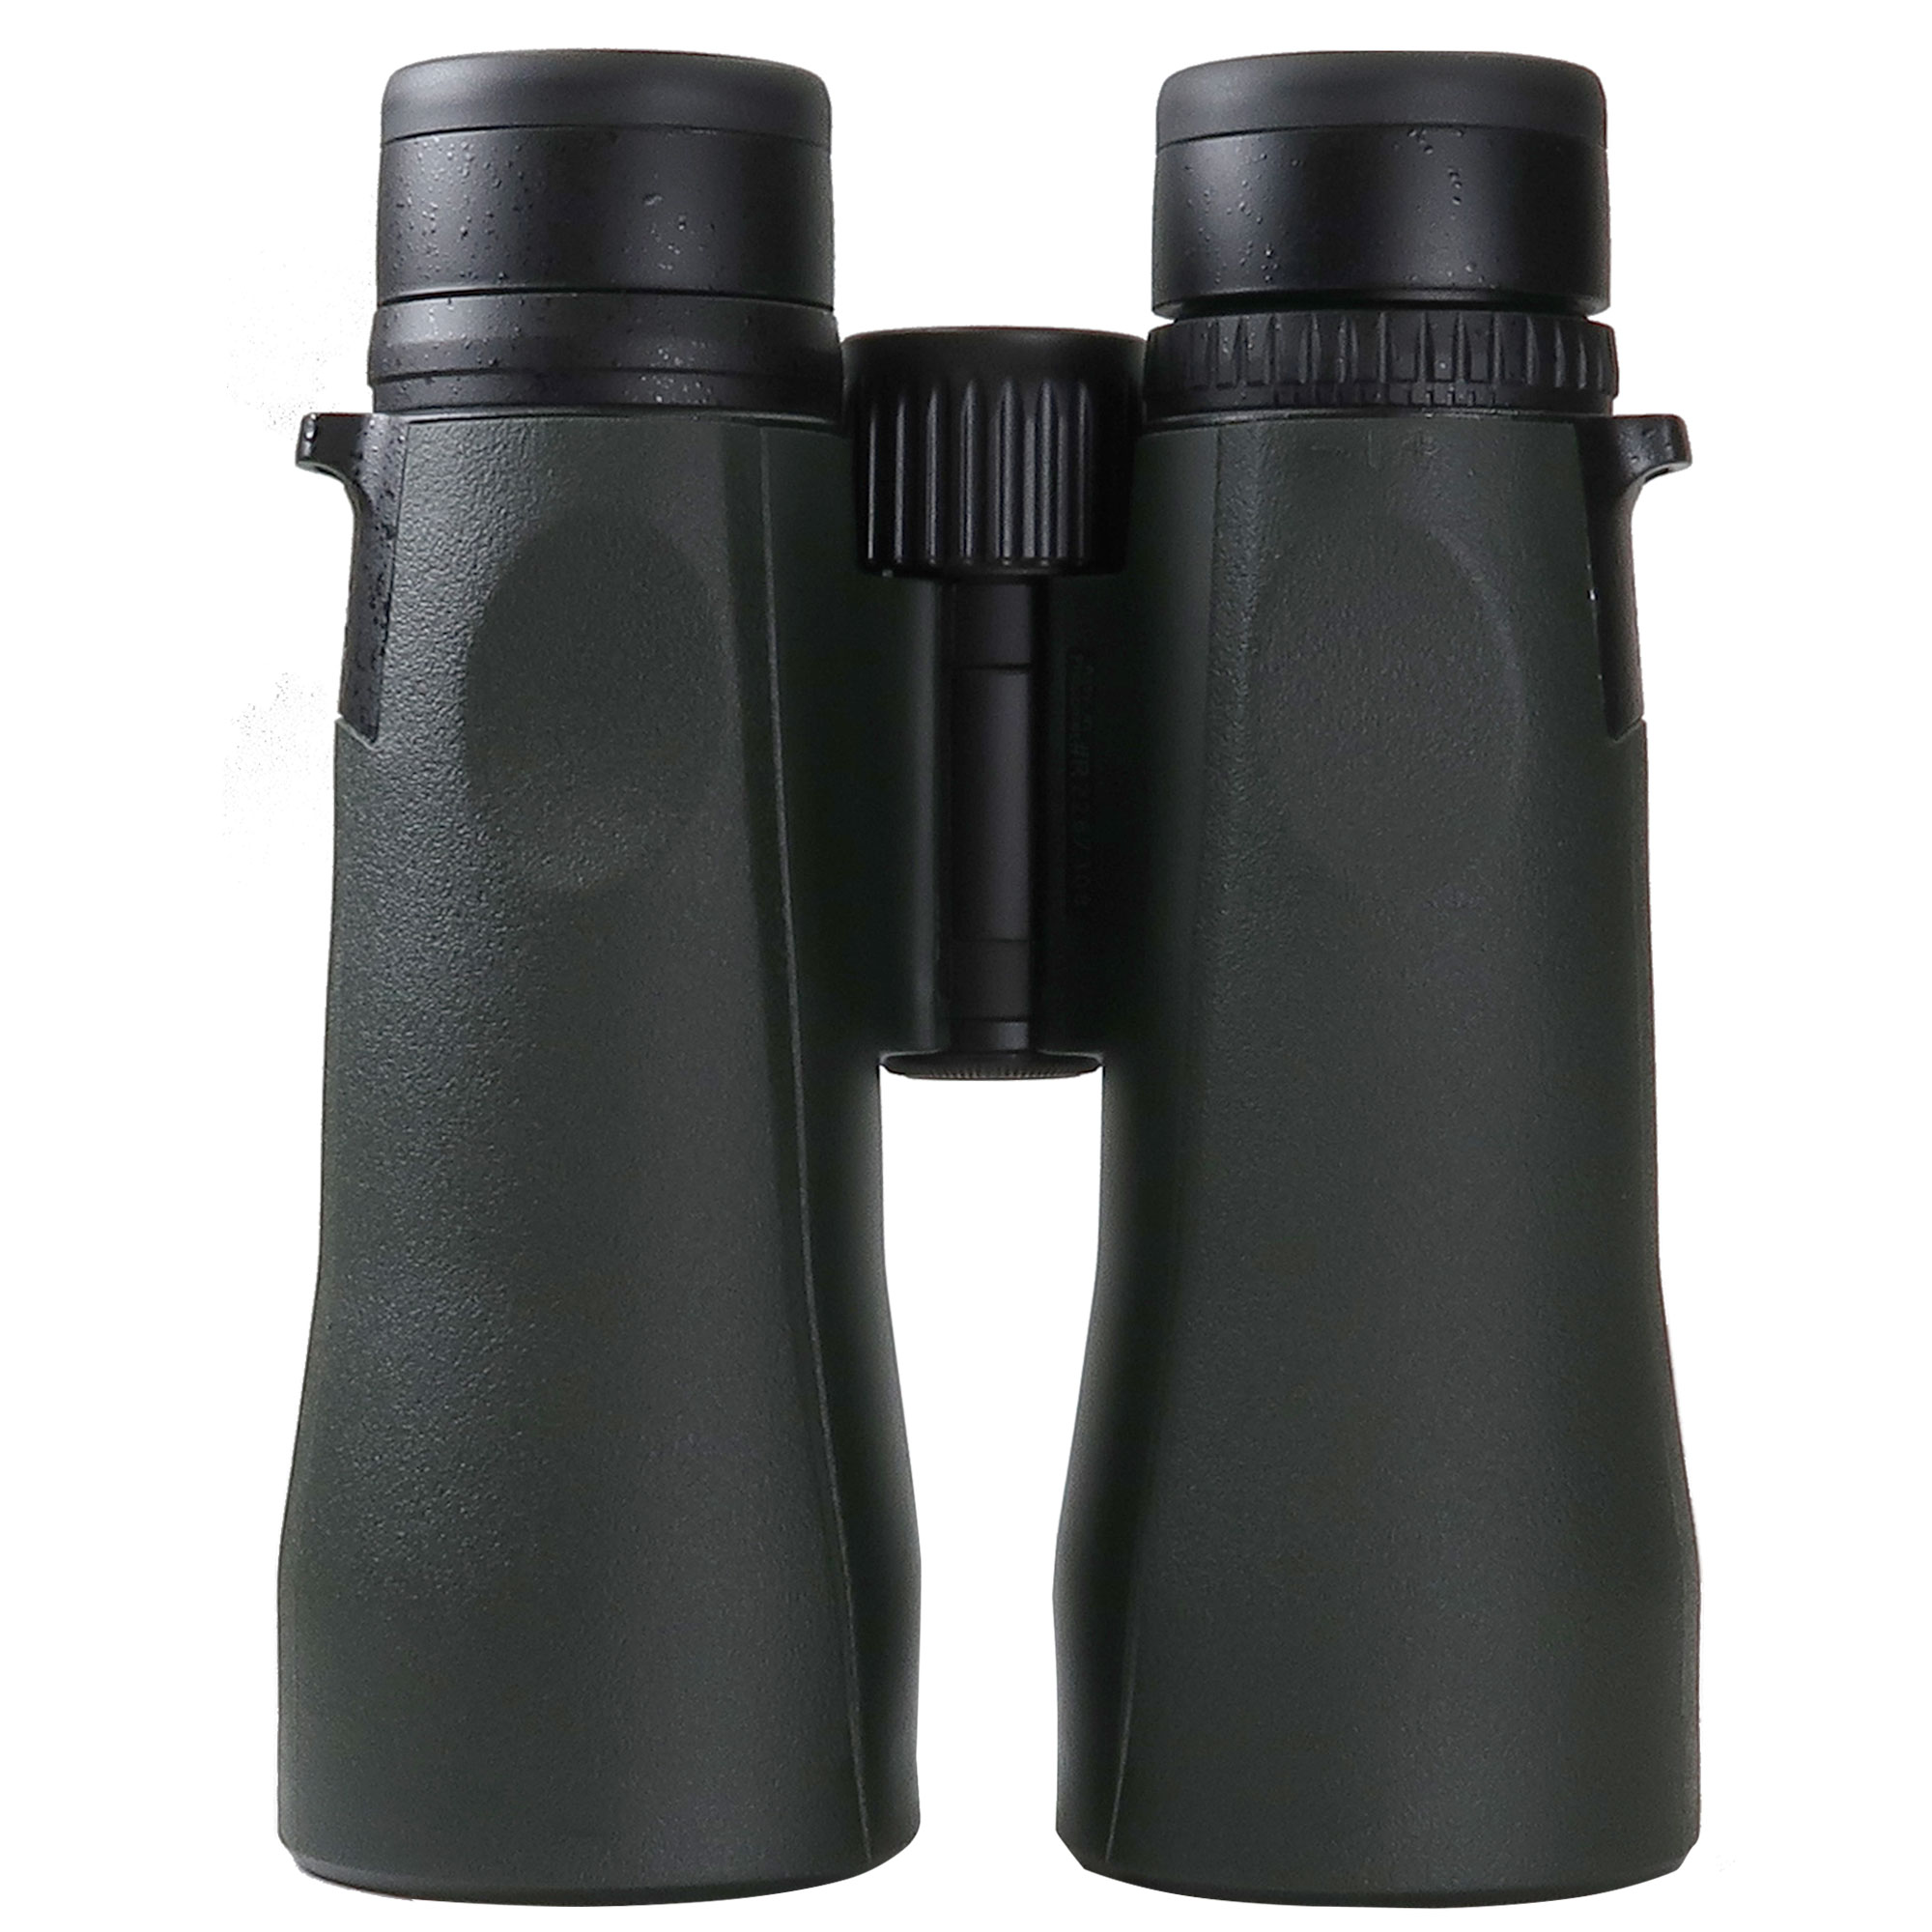 Vortex 10x50 Viper Roof Prism HD Binoculars V202 (Green)